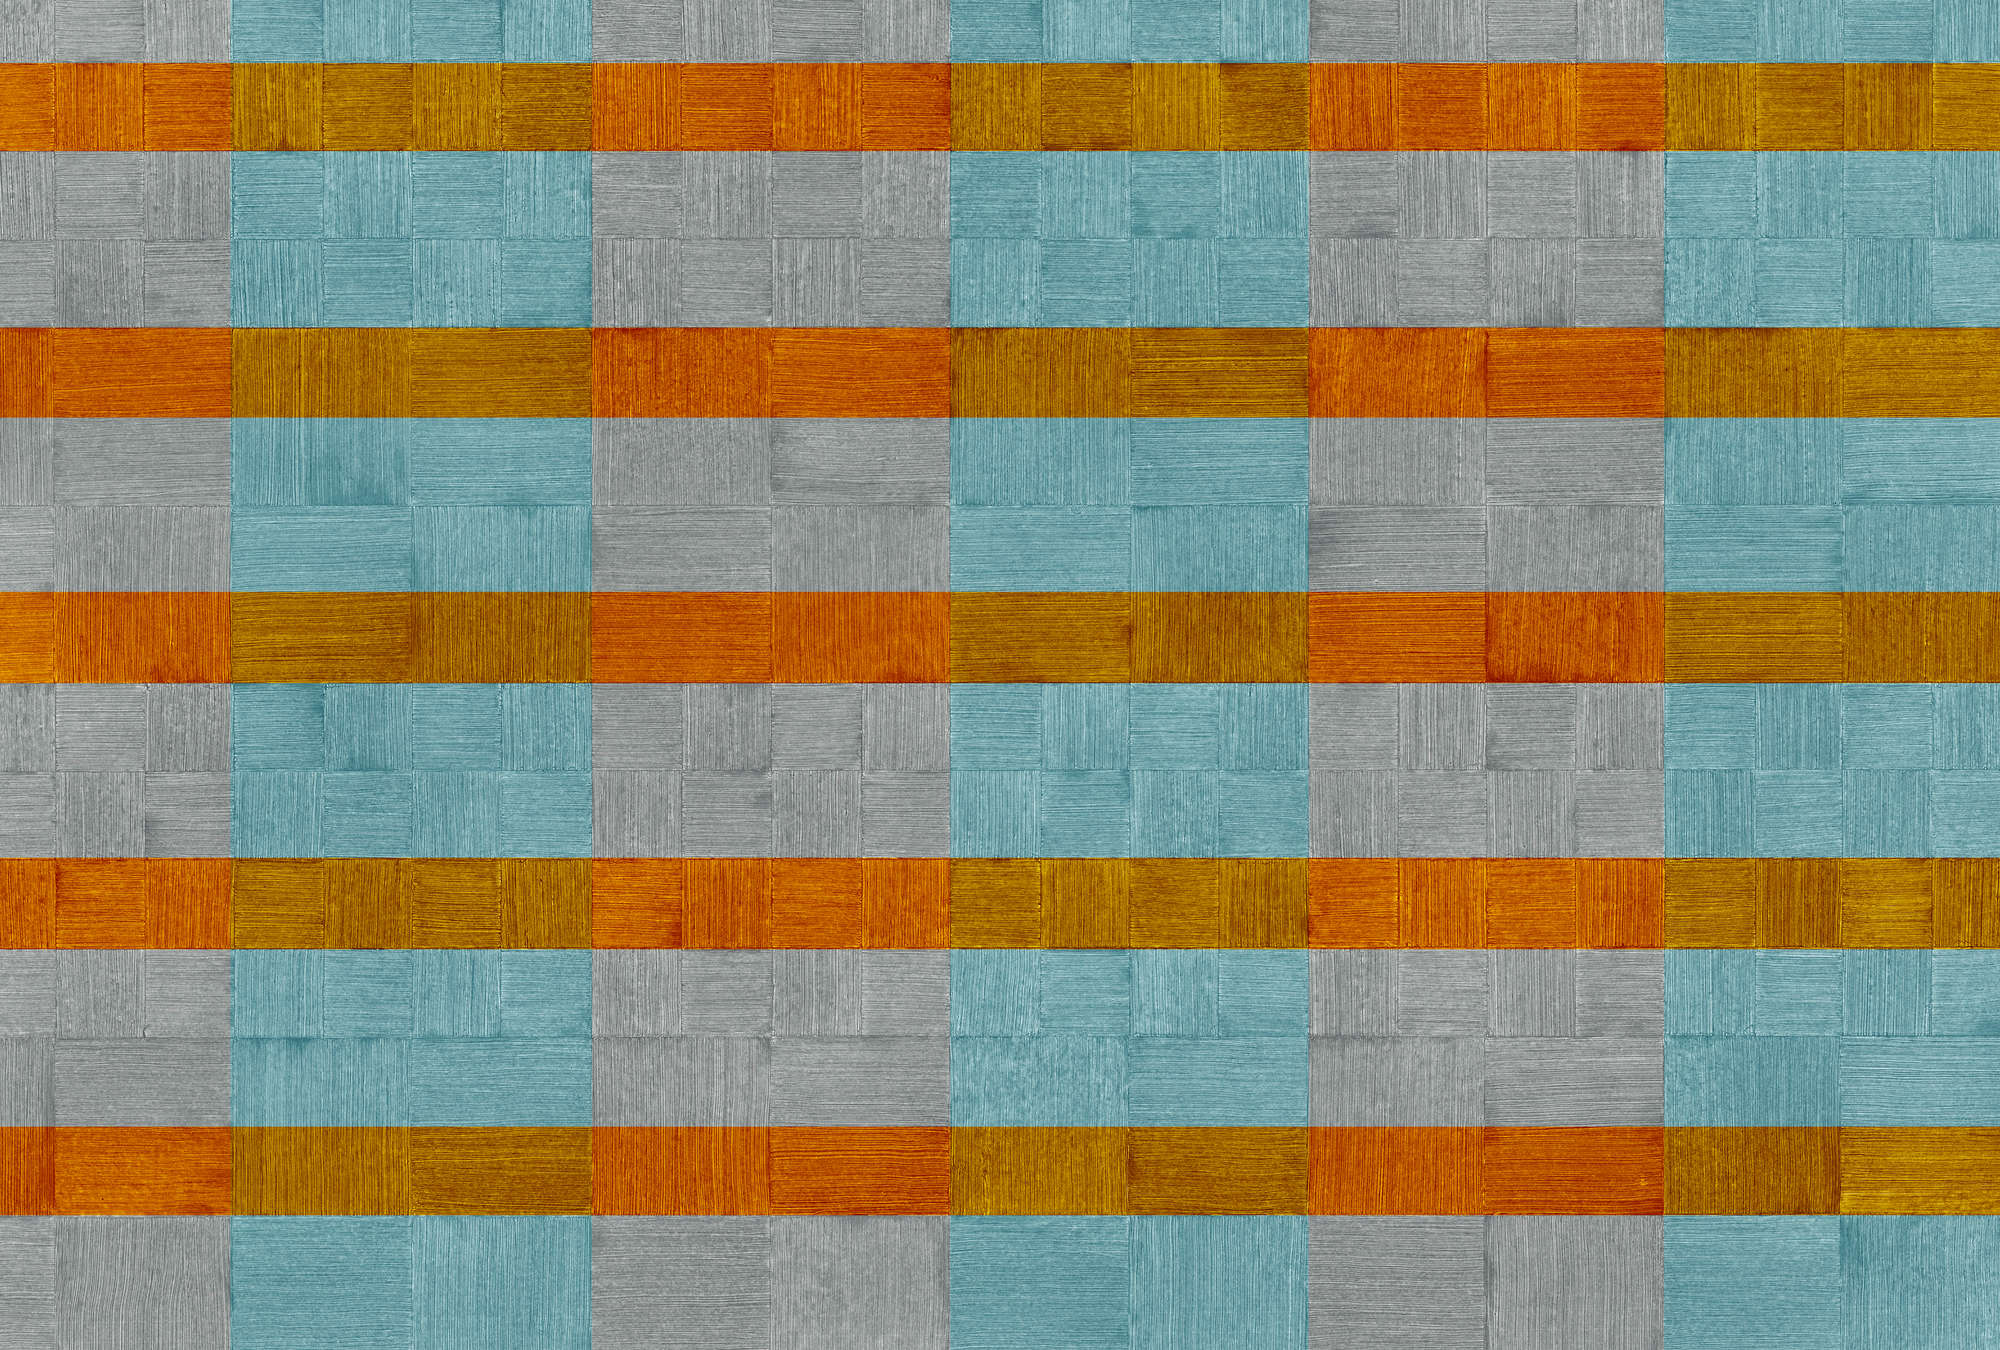             Fototapete Streifendesign, Strukturmuster, kariert – Blau, Grau, Orange
        